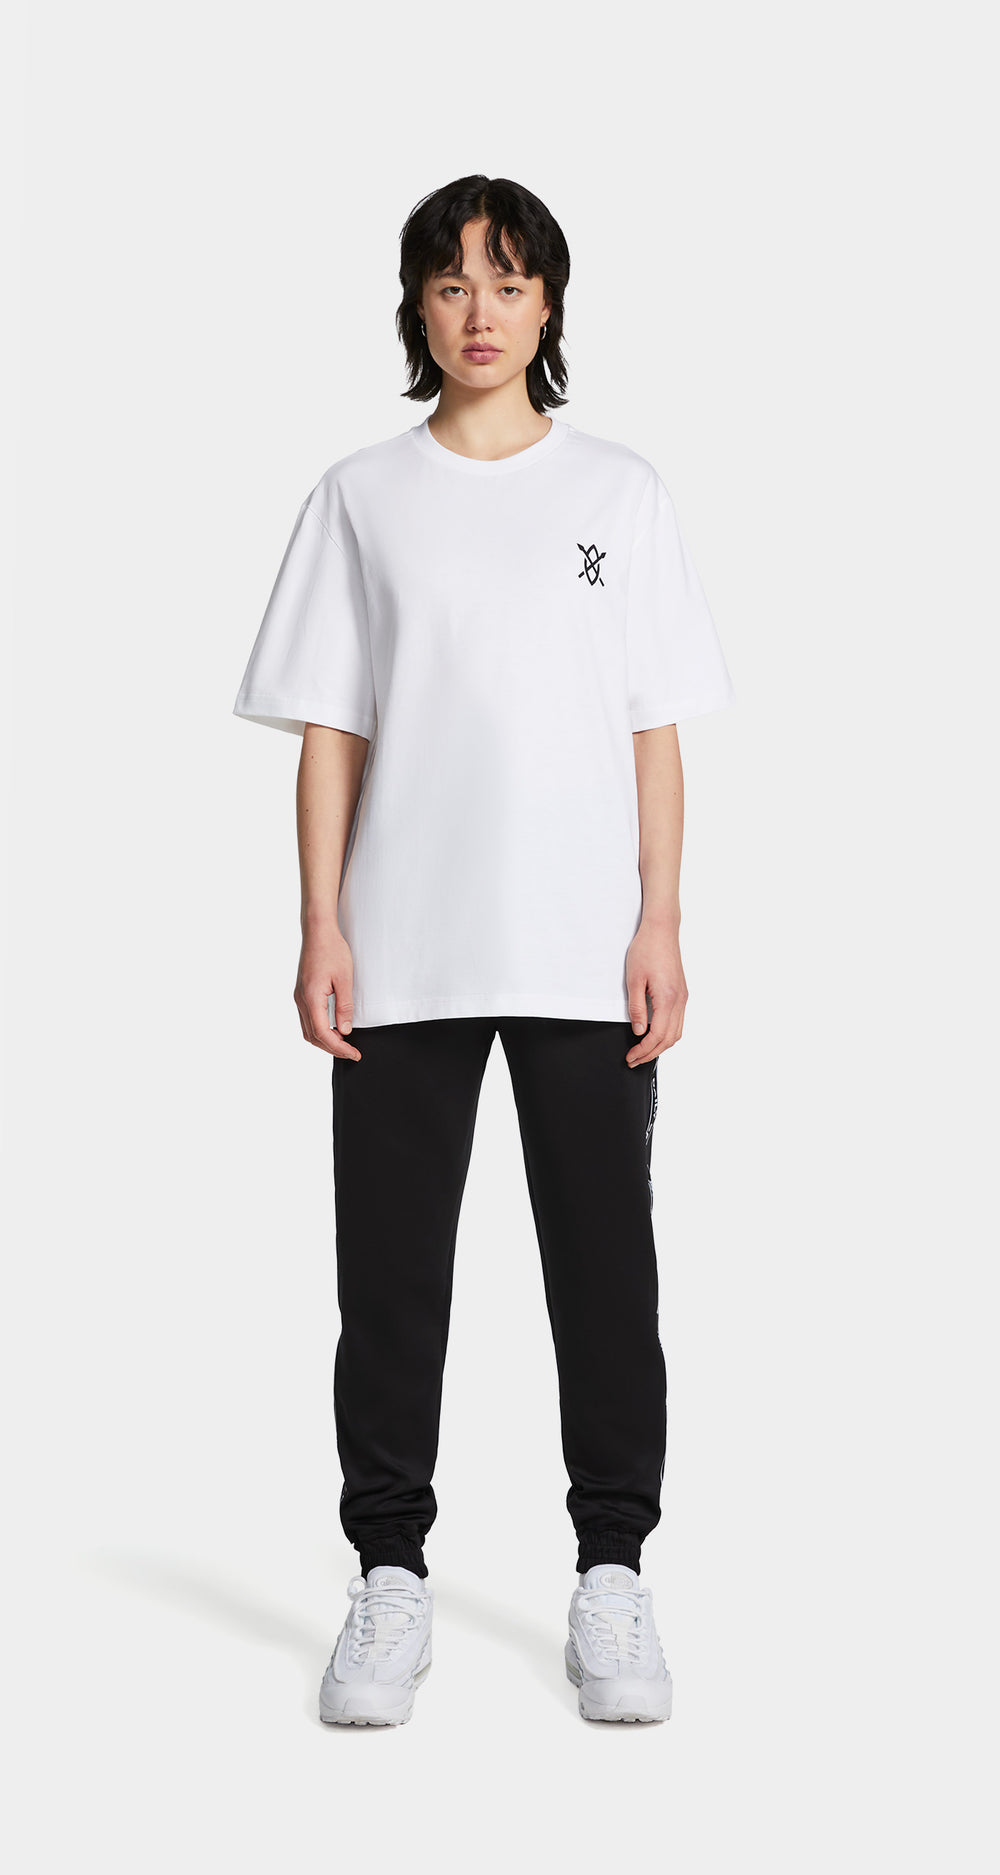 DP - White Black New York Flagship Store T-Shirt - Wmn - Front